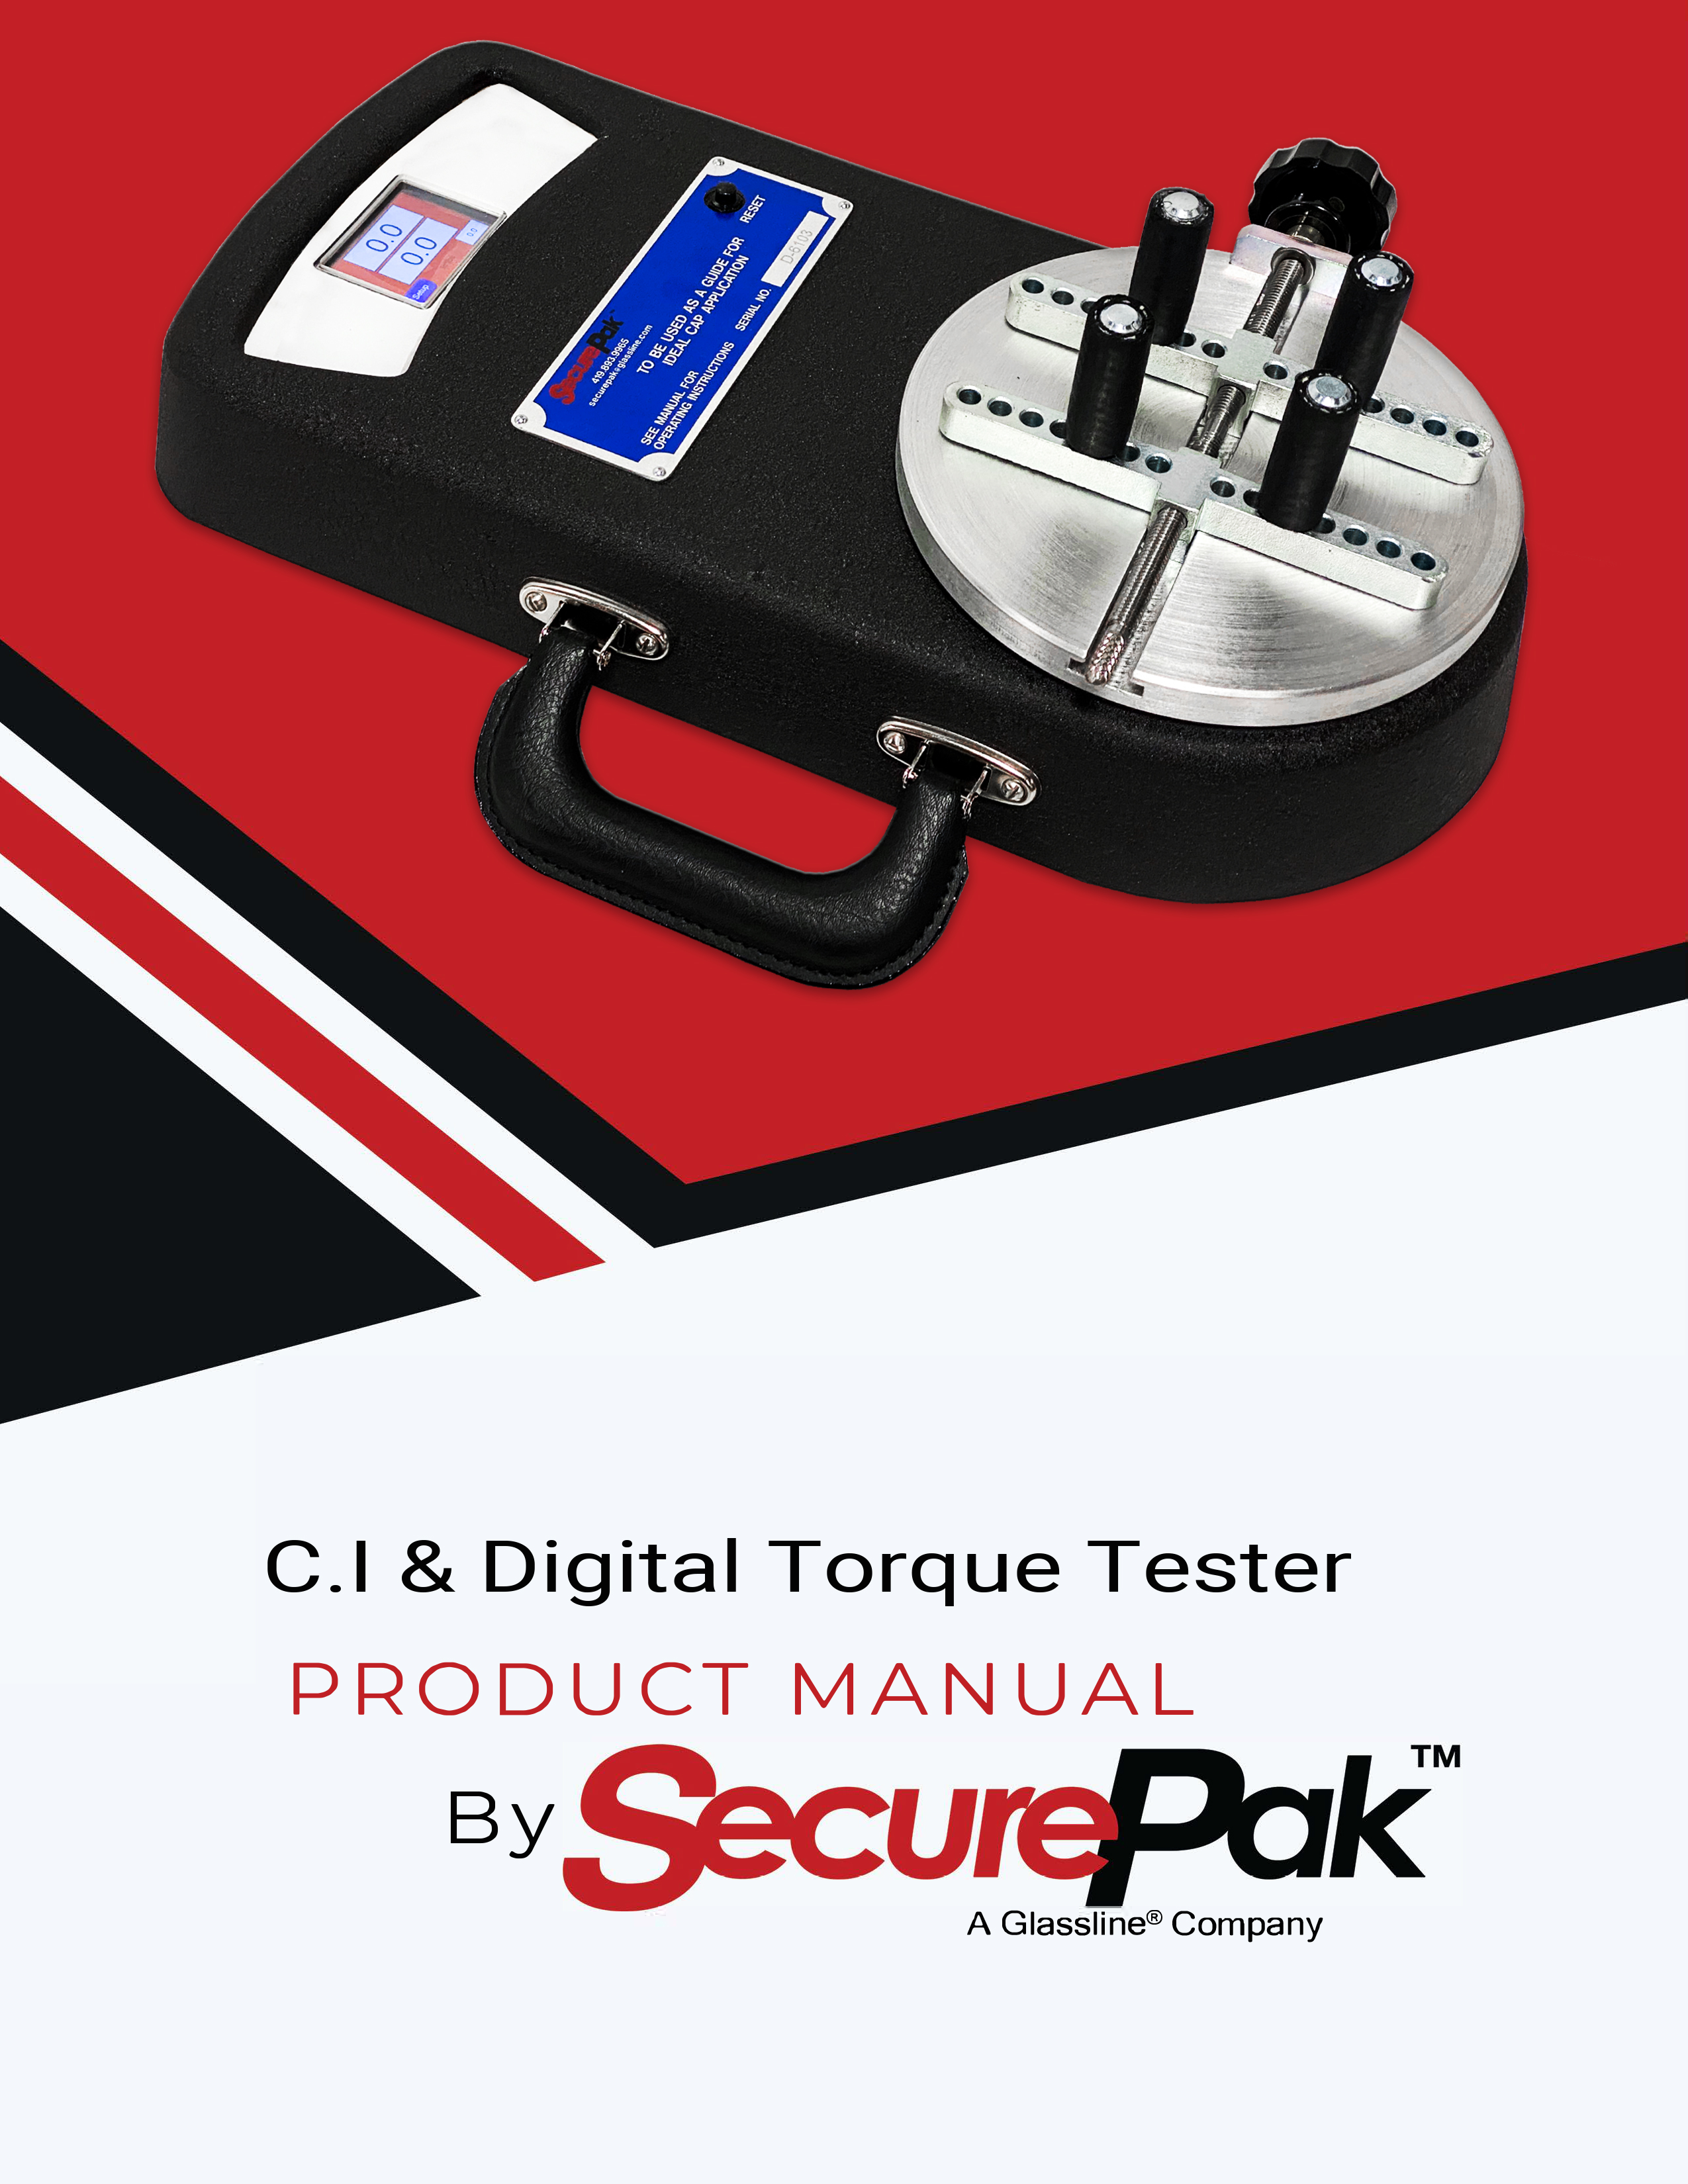 Protected: Computer Interface & Digital Torque Tester Manual